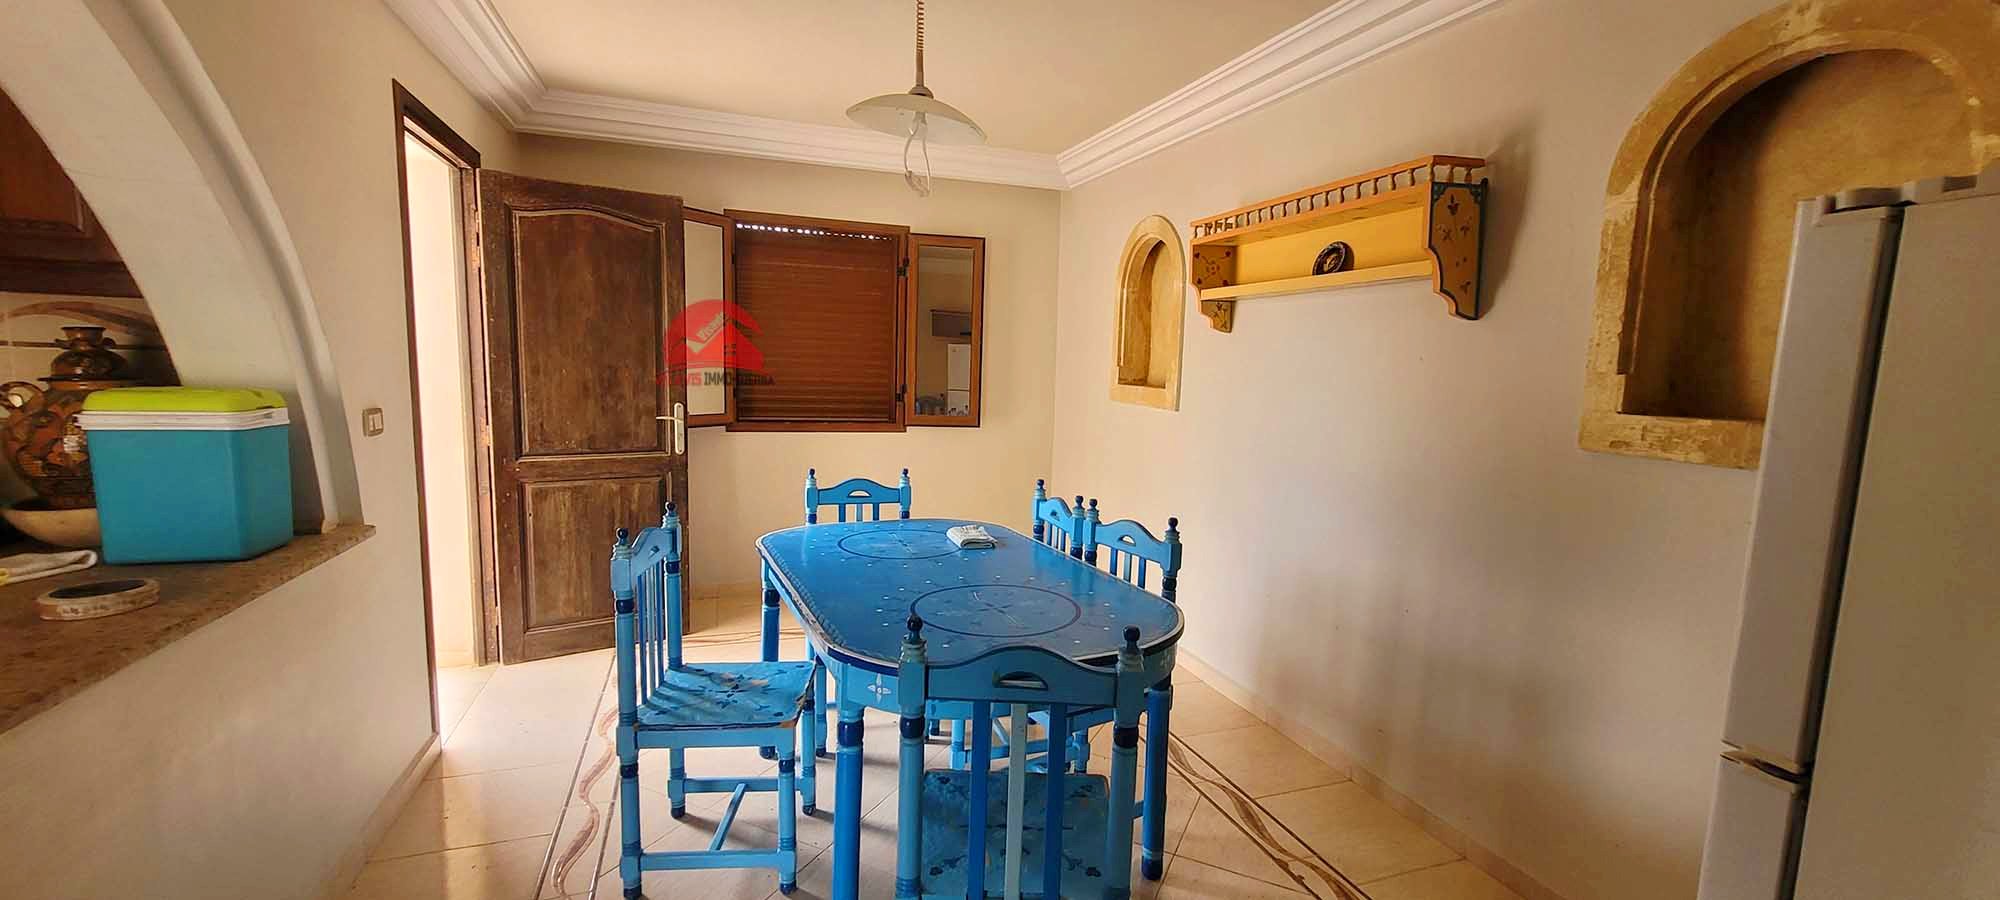 Djerba - Houmet Essouk Ghizen Vente Maisons Houch djerbien avec piscine  titre bleu  ref h670